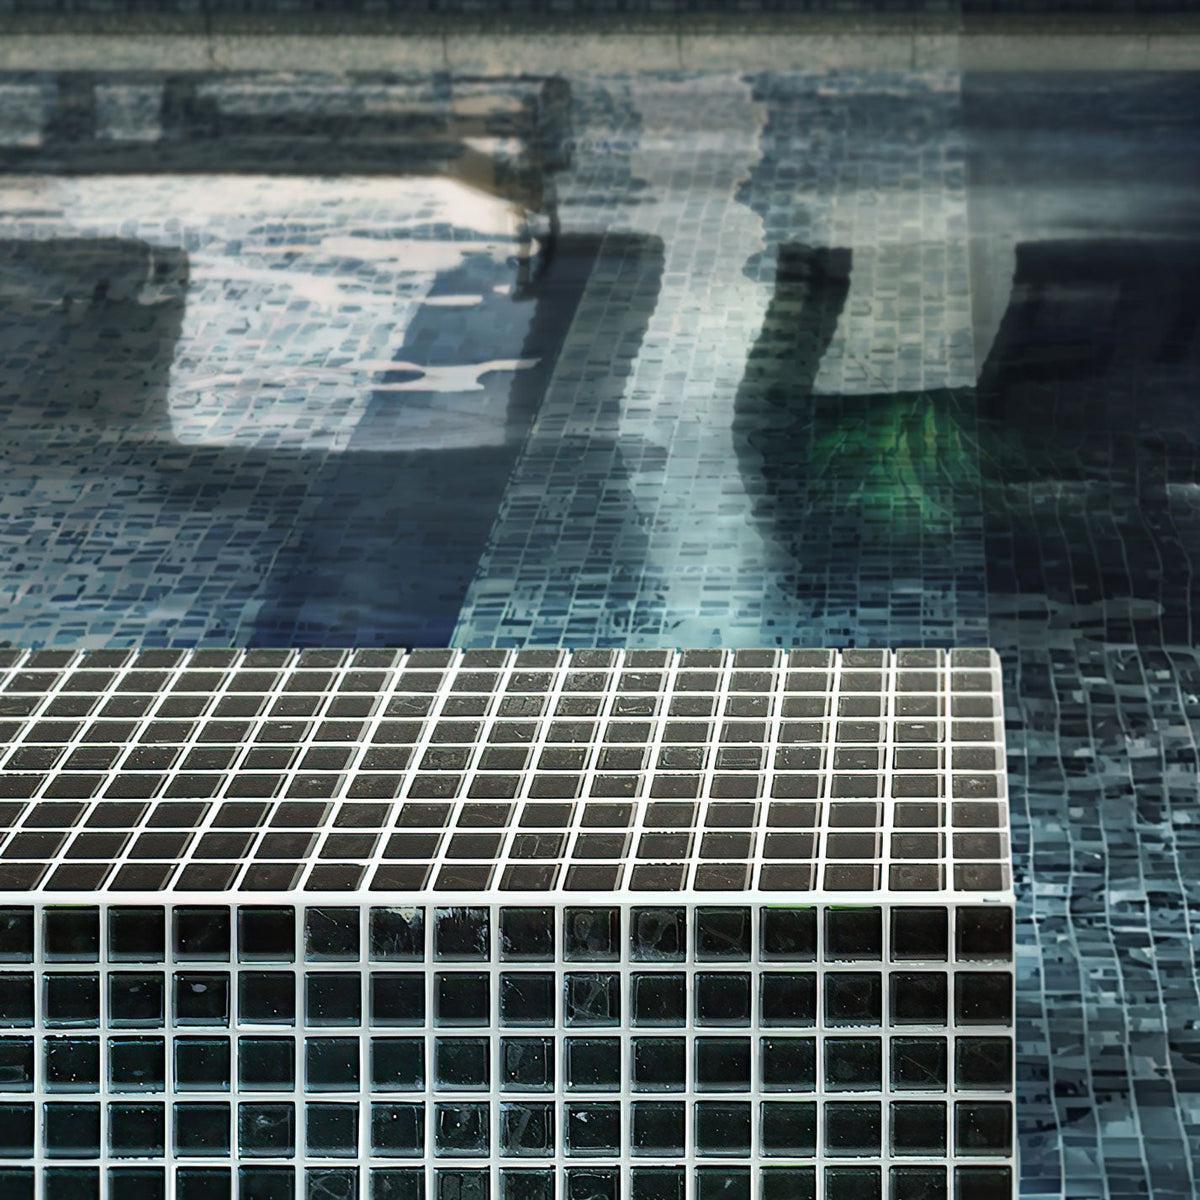 Black polished glass tile swimming pool edge in sunlight 